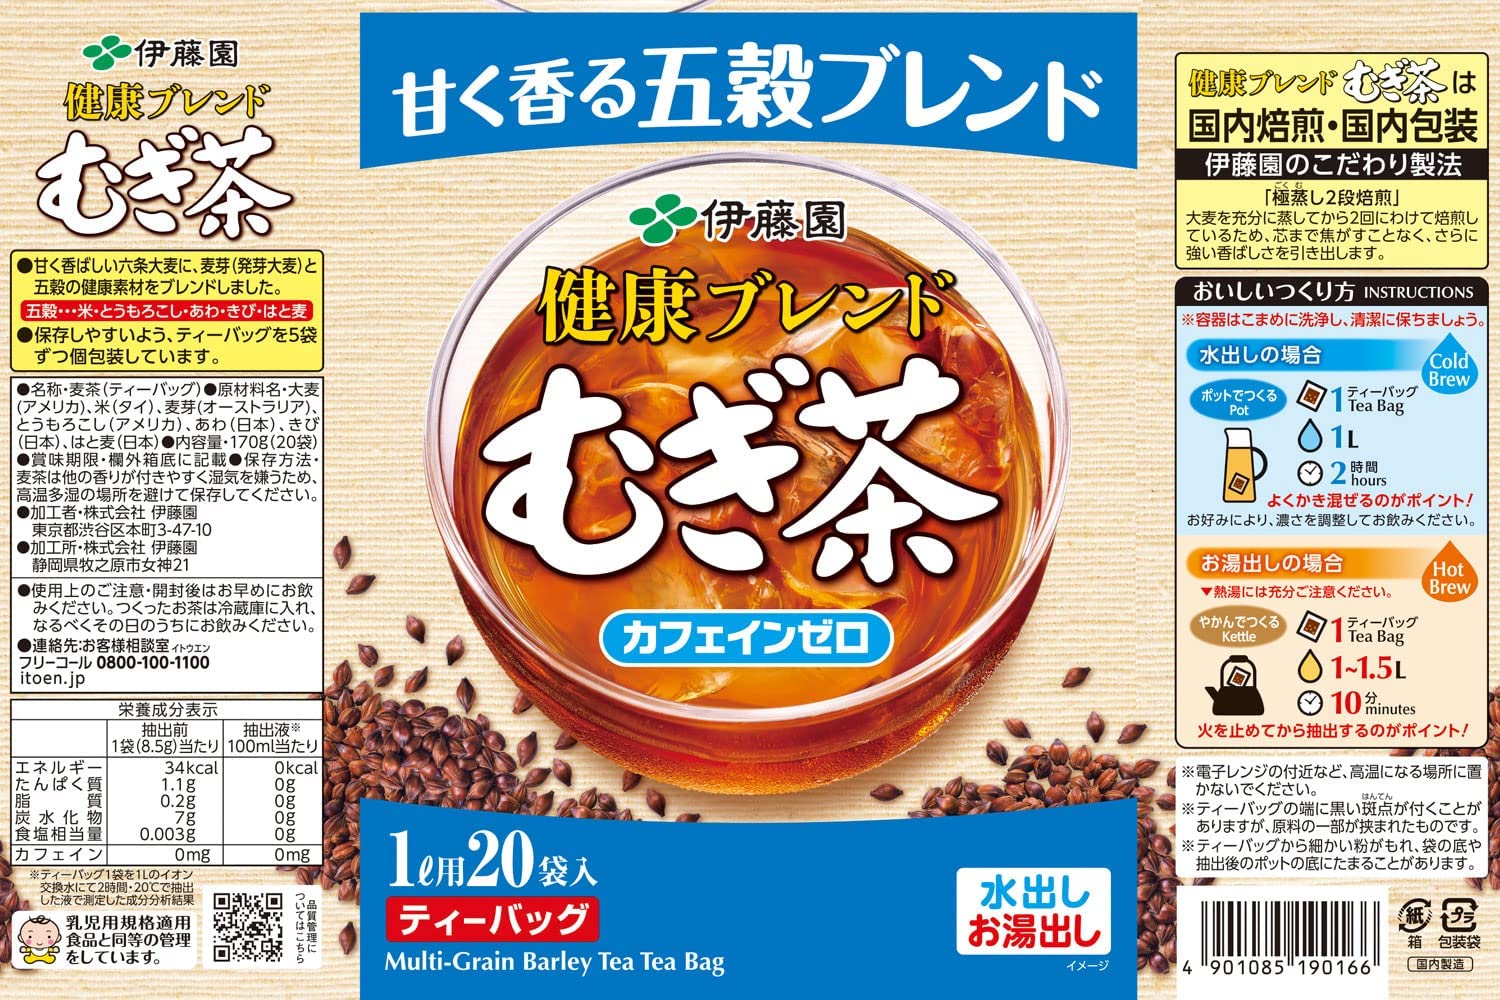 Ito En Decaf / Non-caffeine Multigrain Barley Tea Tea Bag (Mugicha) 8.5g x 20 Teabags x 5 Boxes - NihonMura